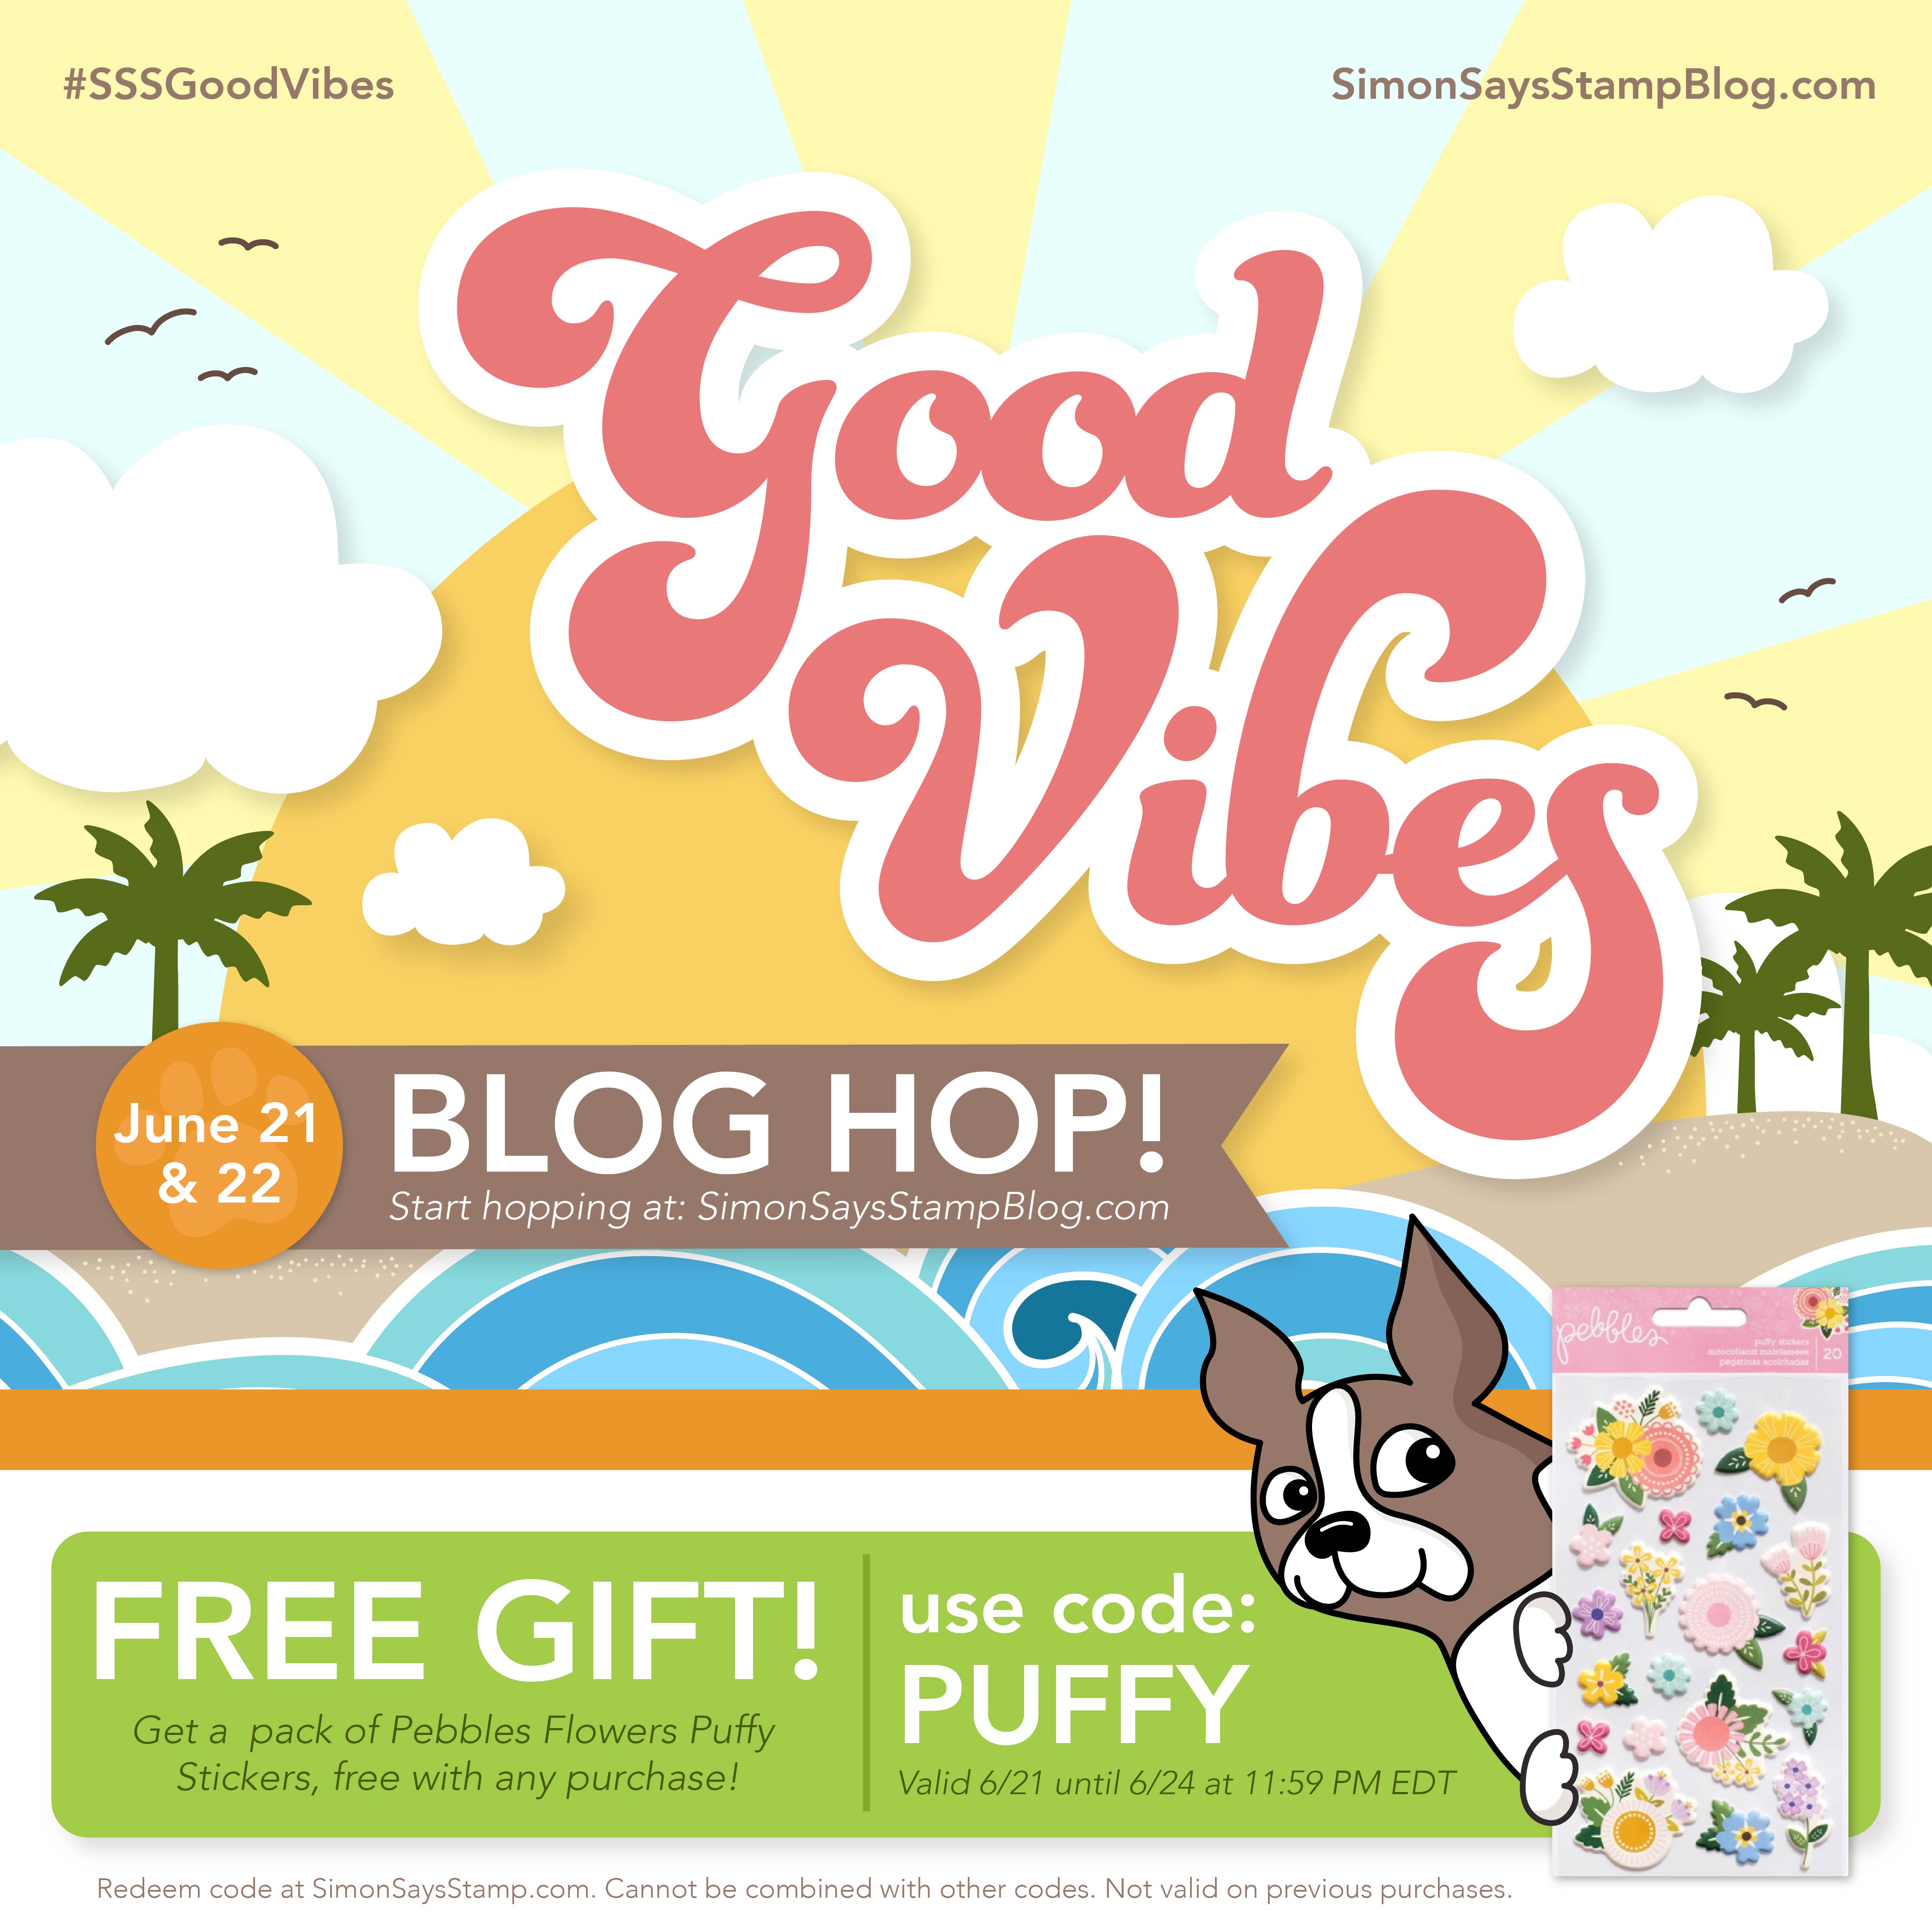 SSS Good Vibes Blog Hop